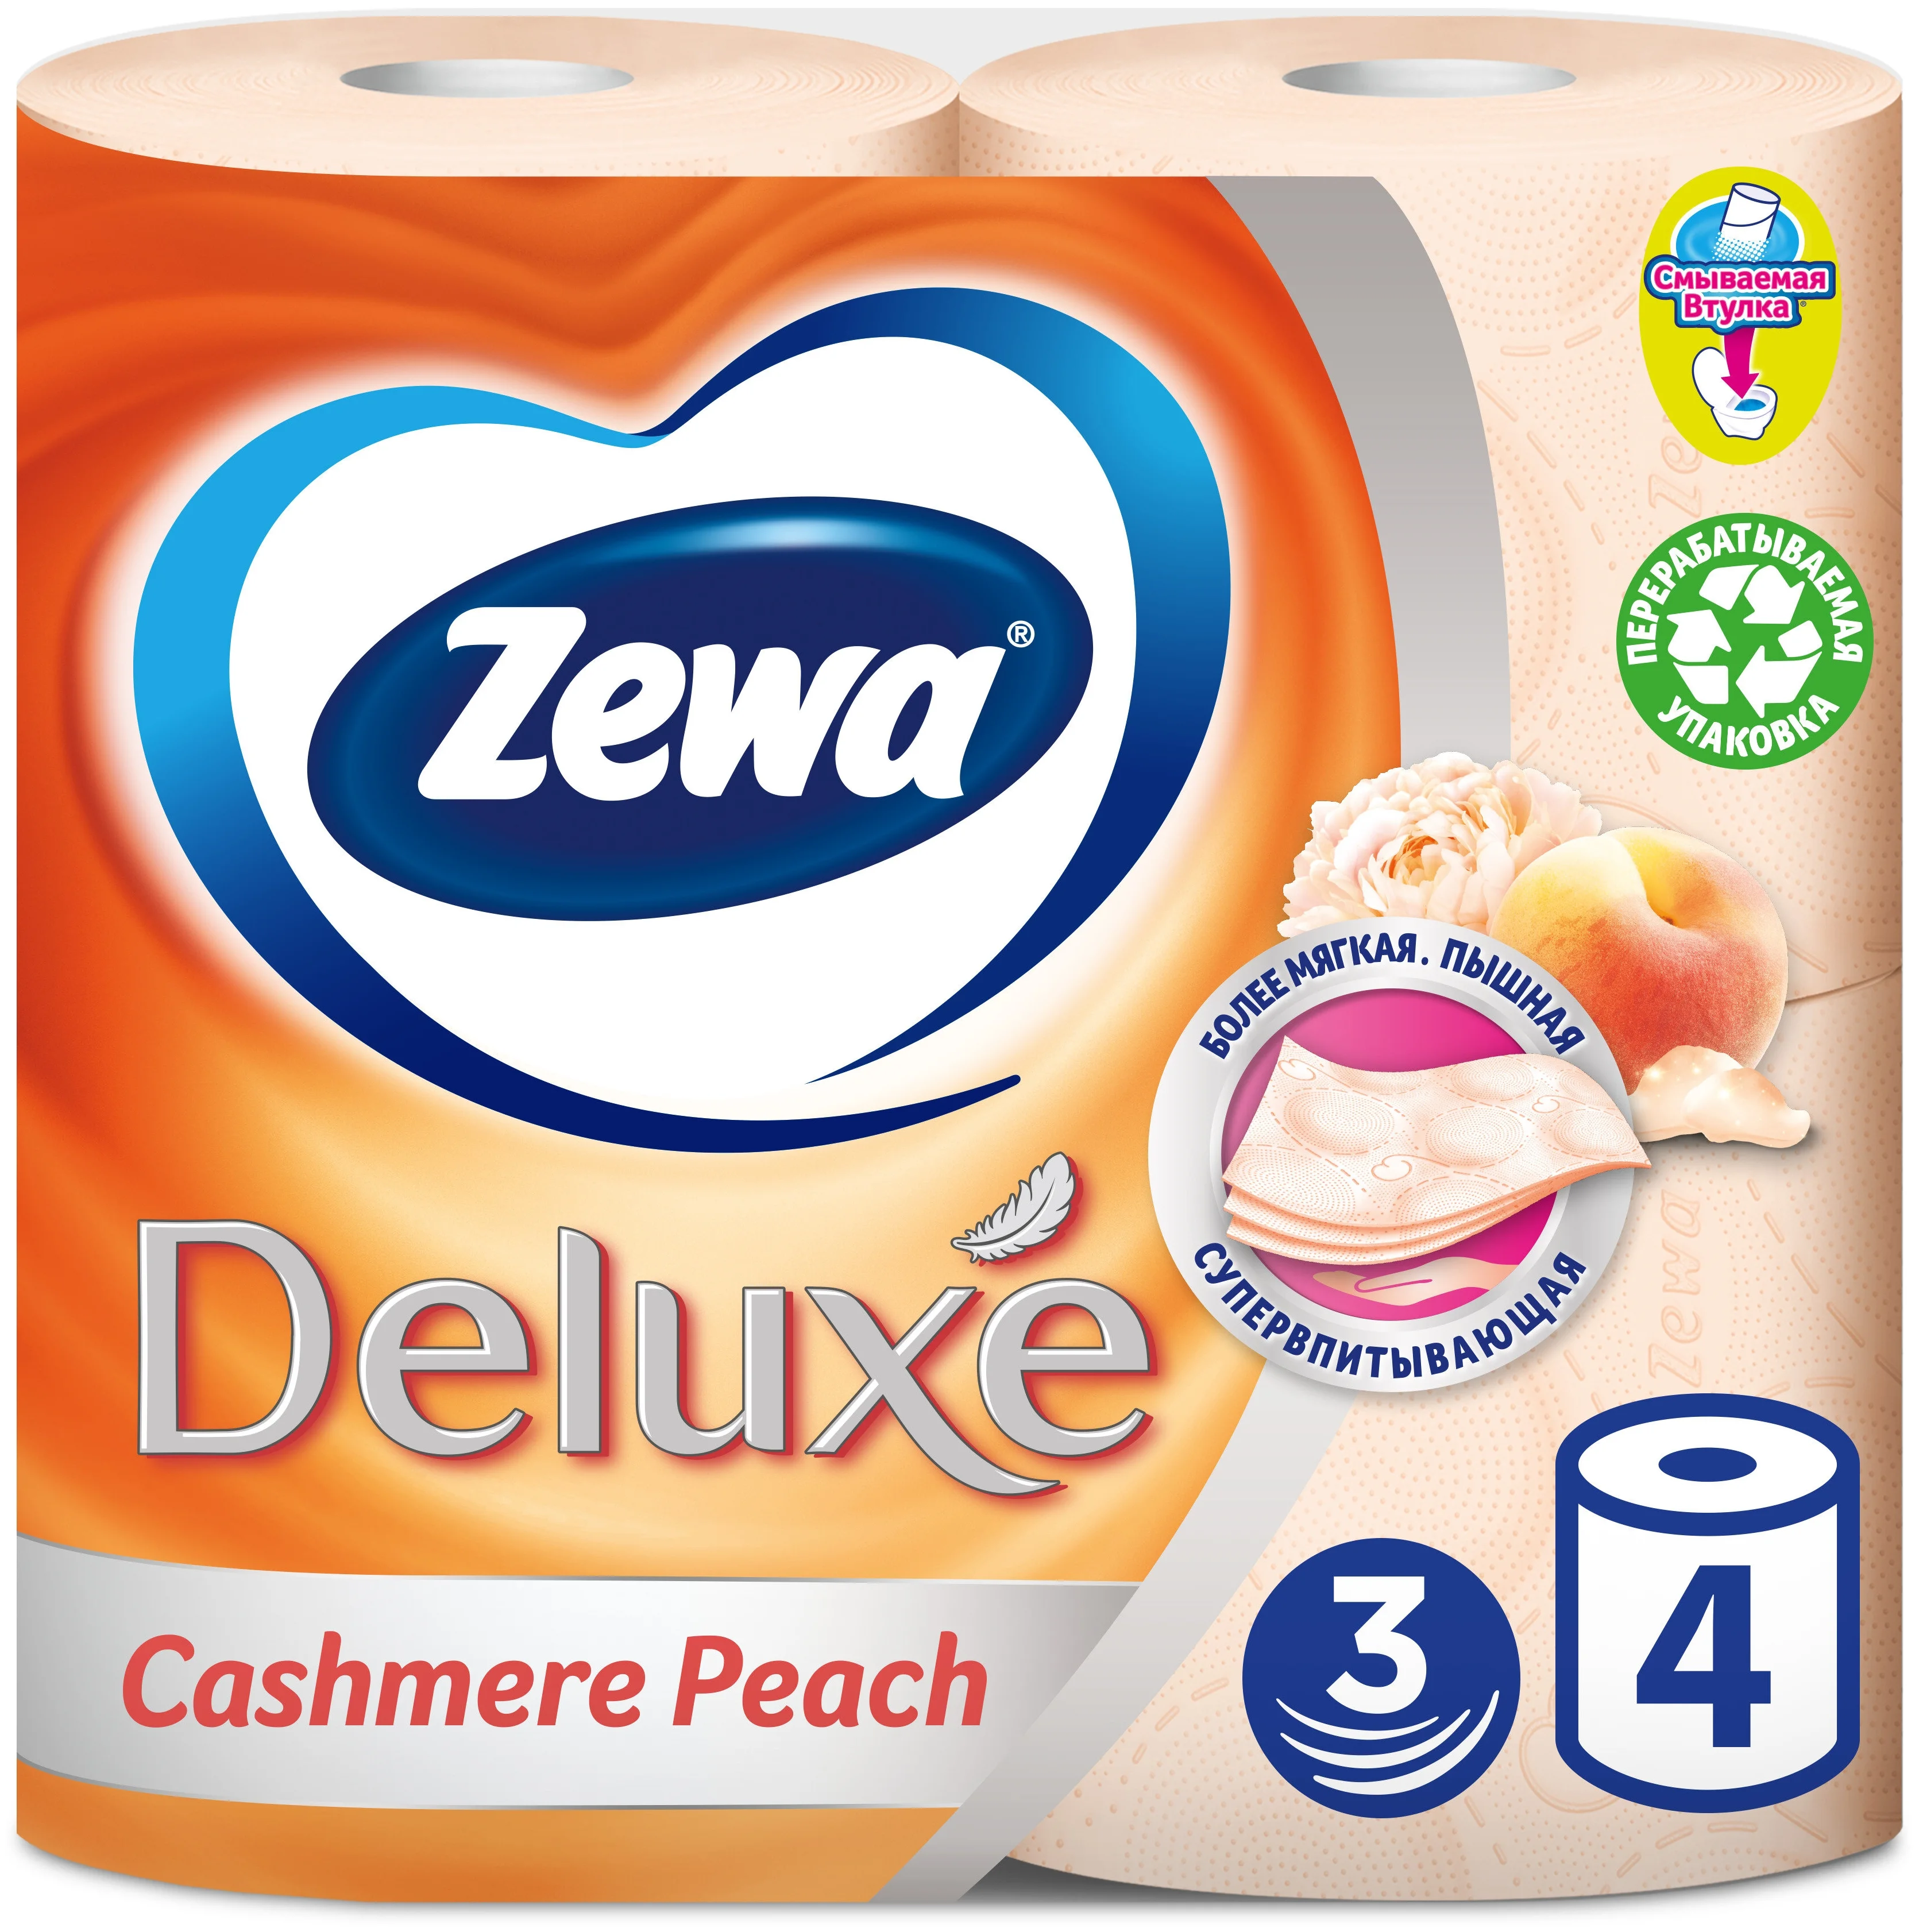 Zewa Deluxe Персик - особенности: ароматизация, тиснение